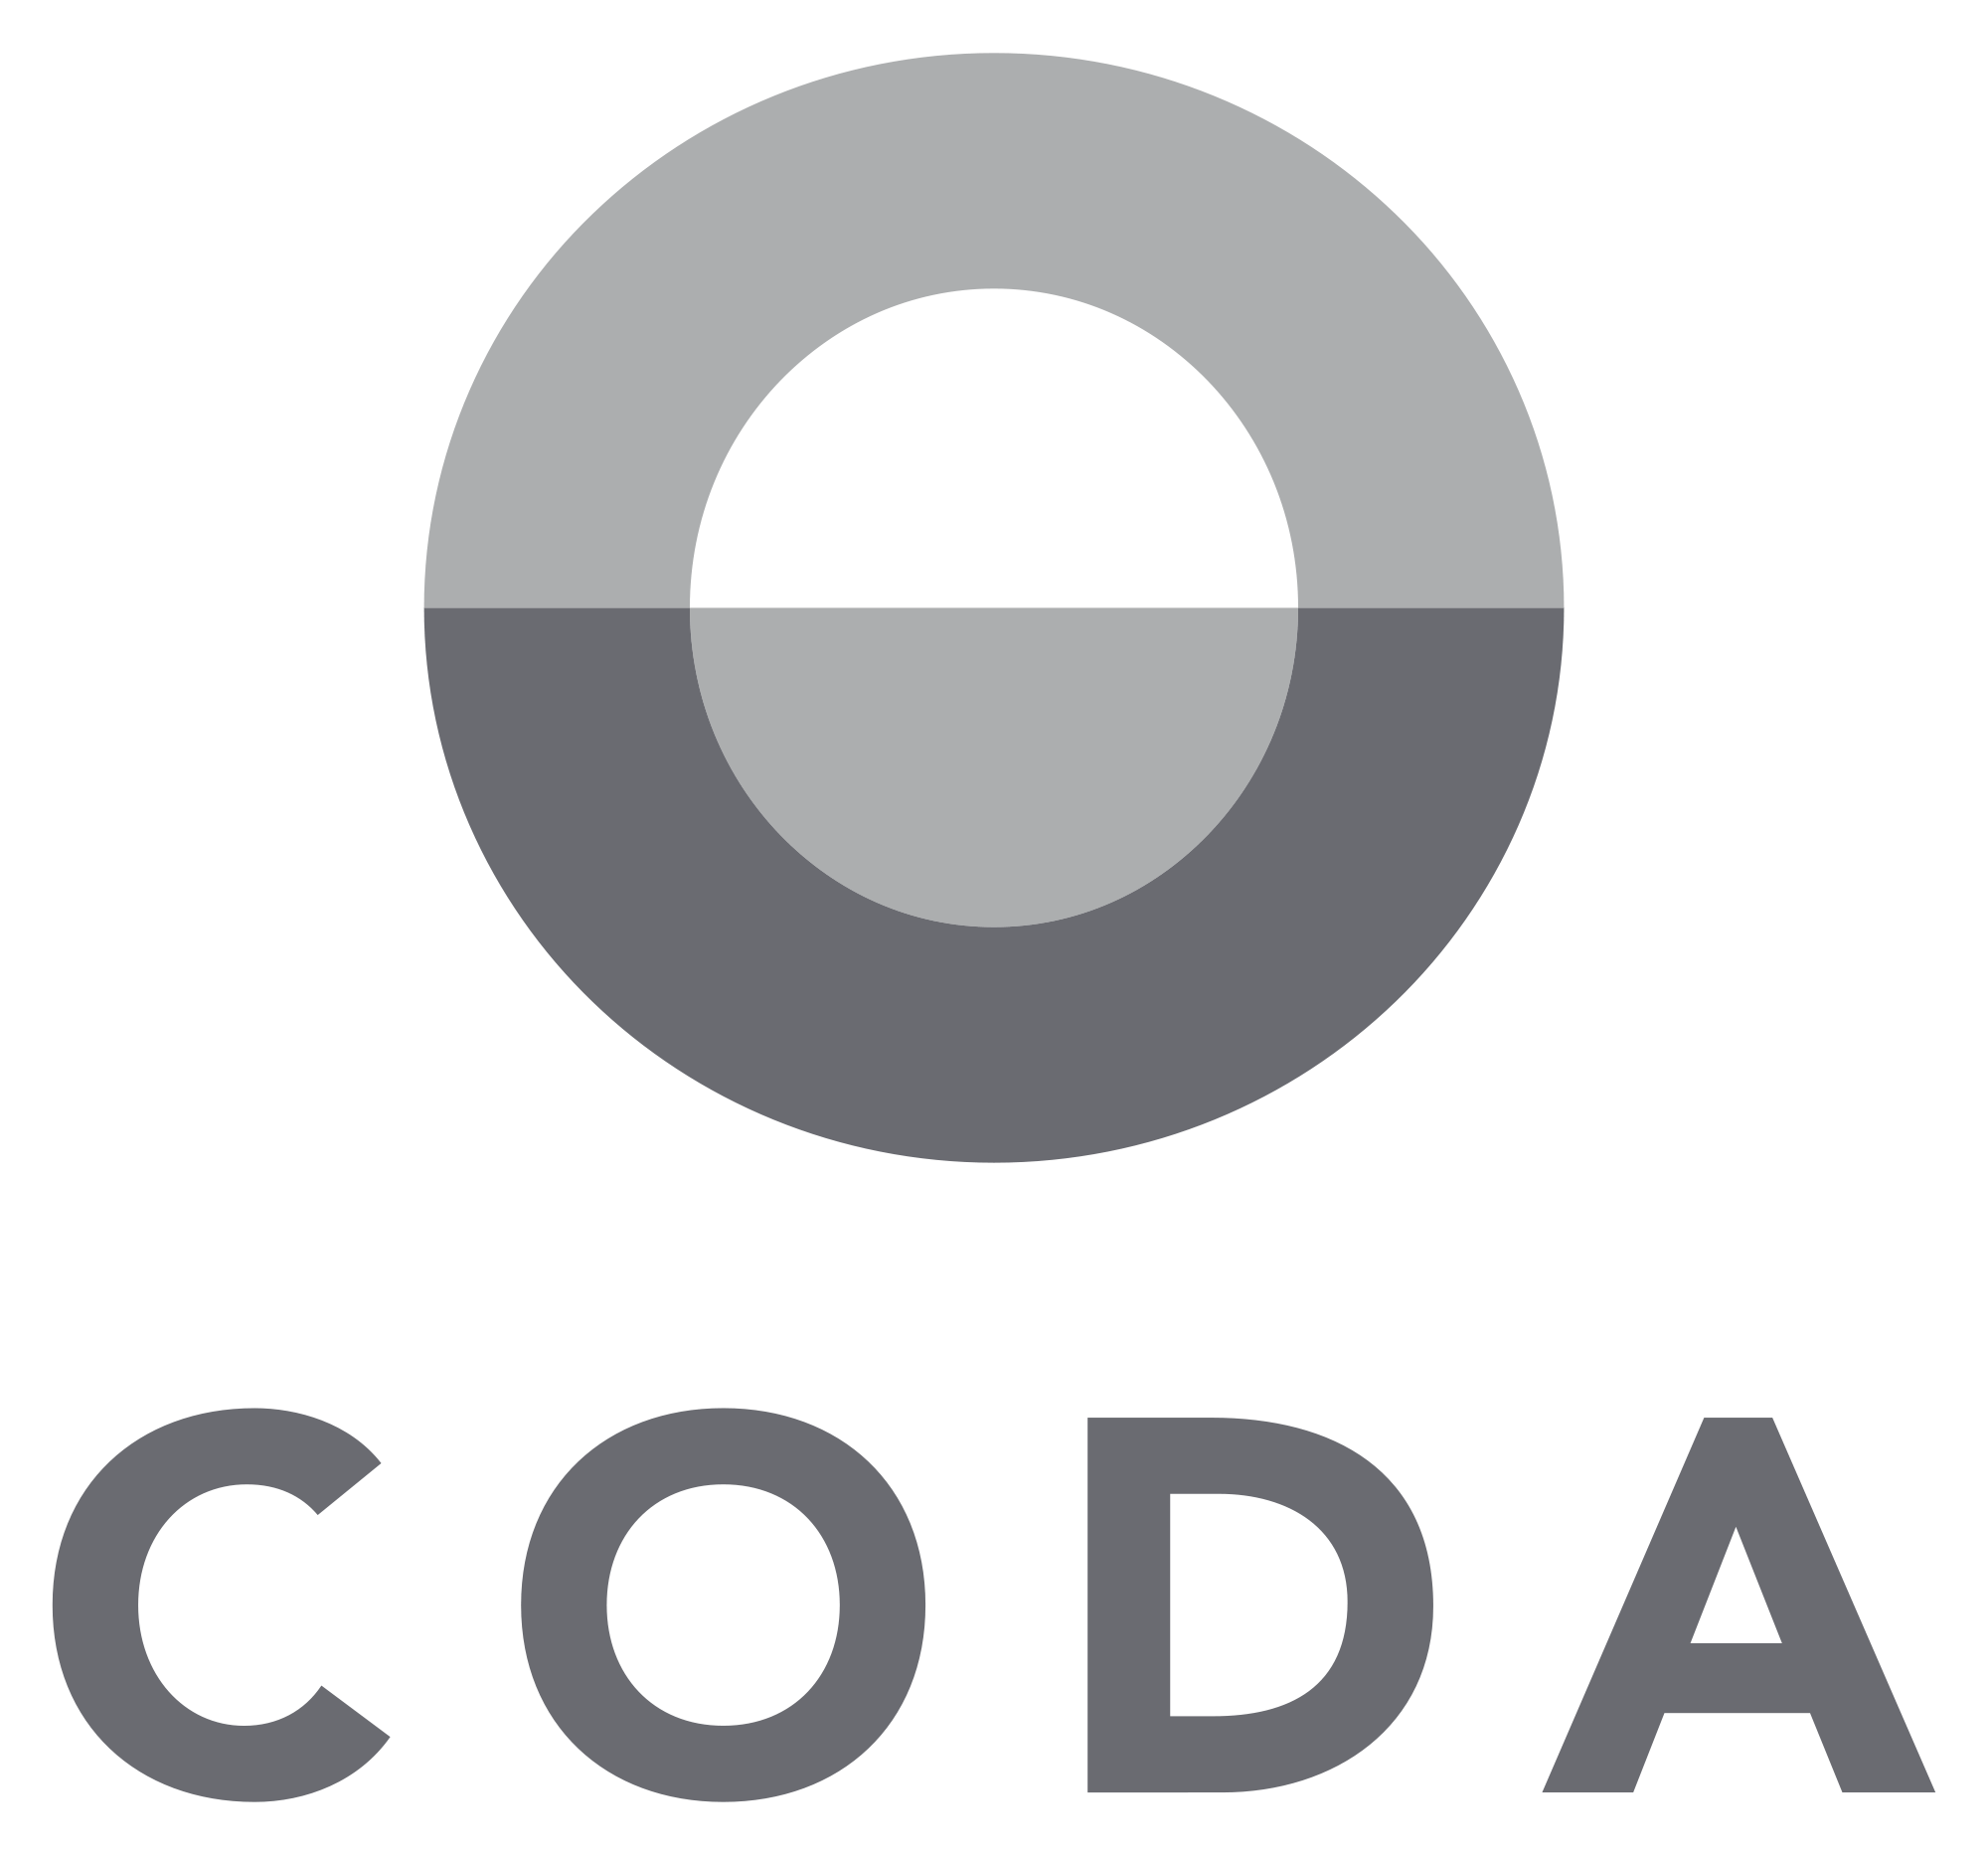 Coda logo, logotype